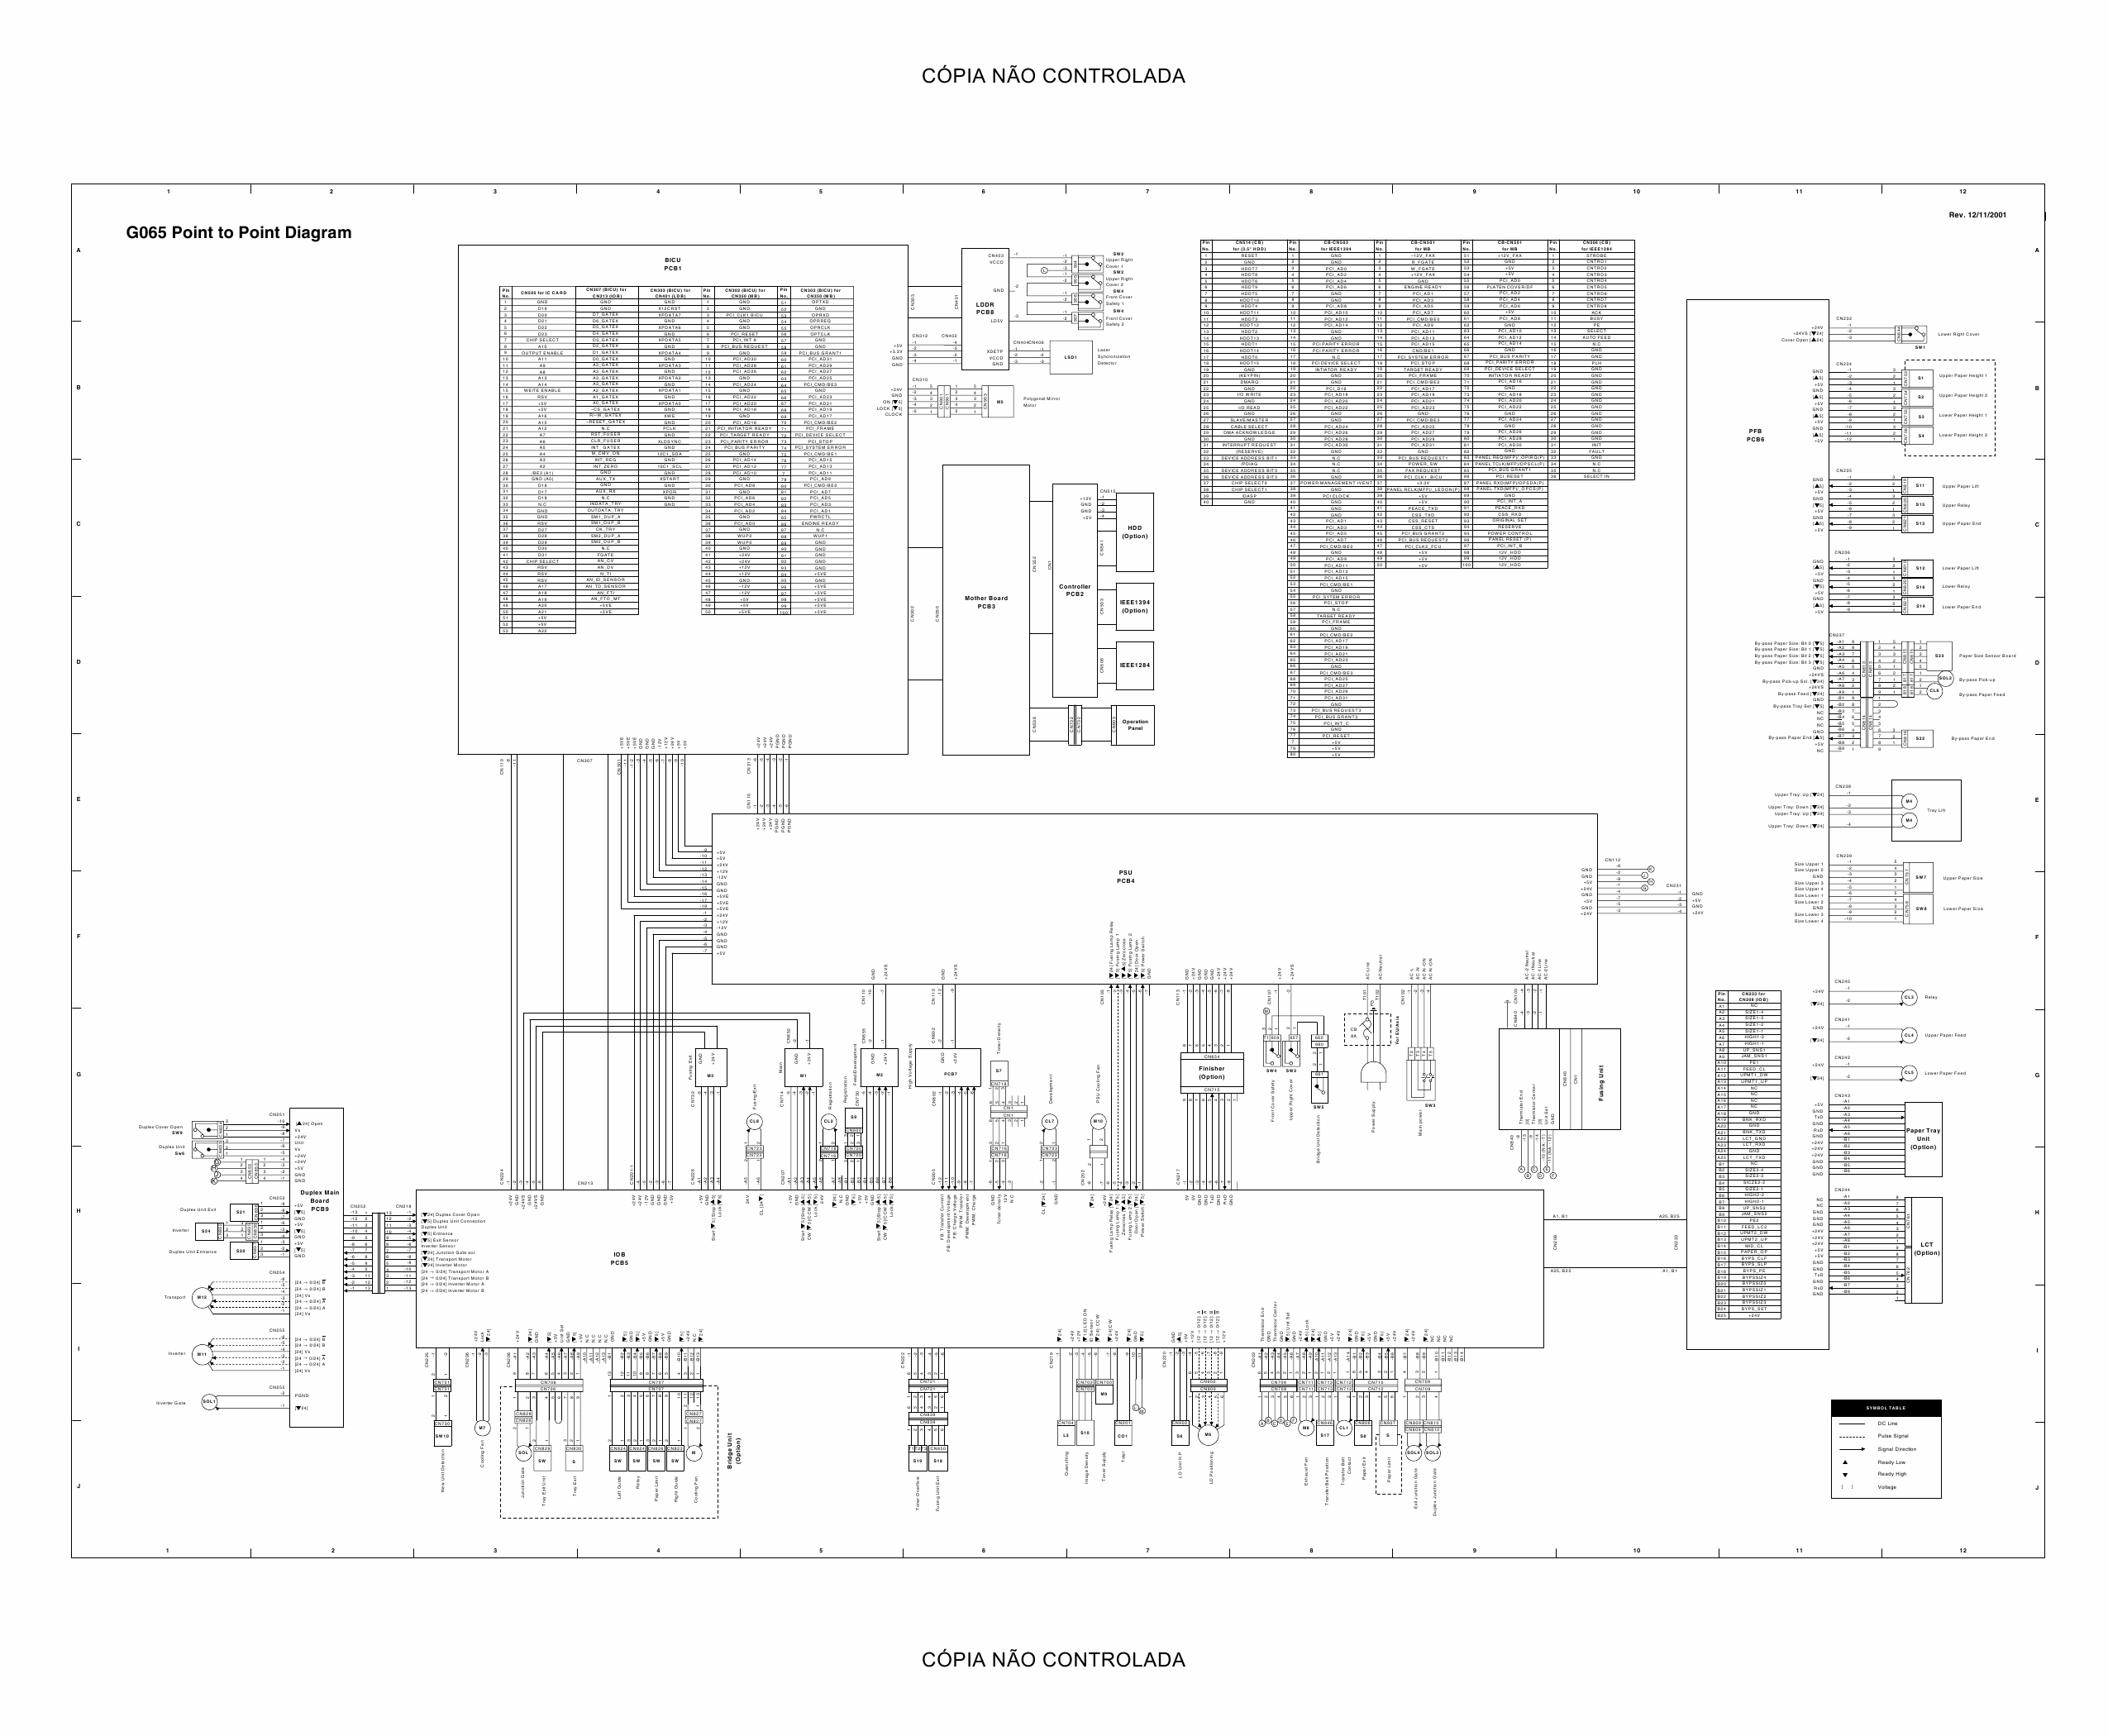 RICOH Aficio AP-4510 G065 Circuit Diagram-1